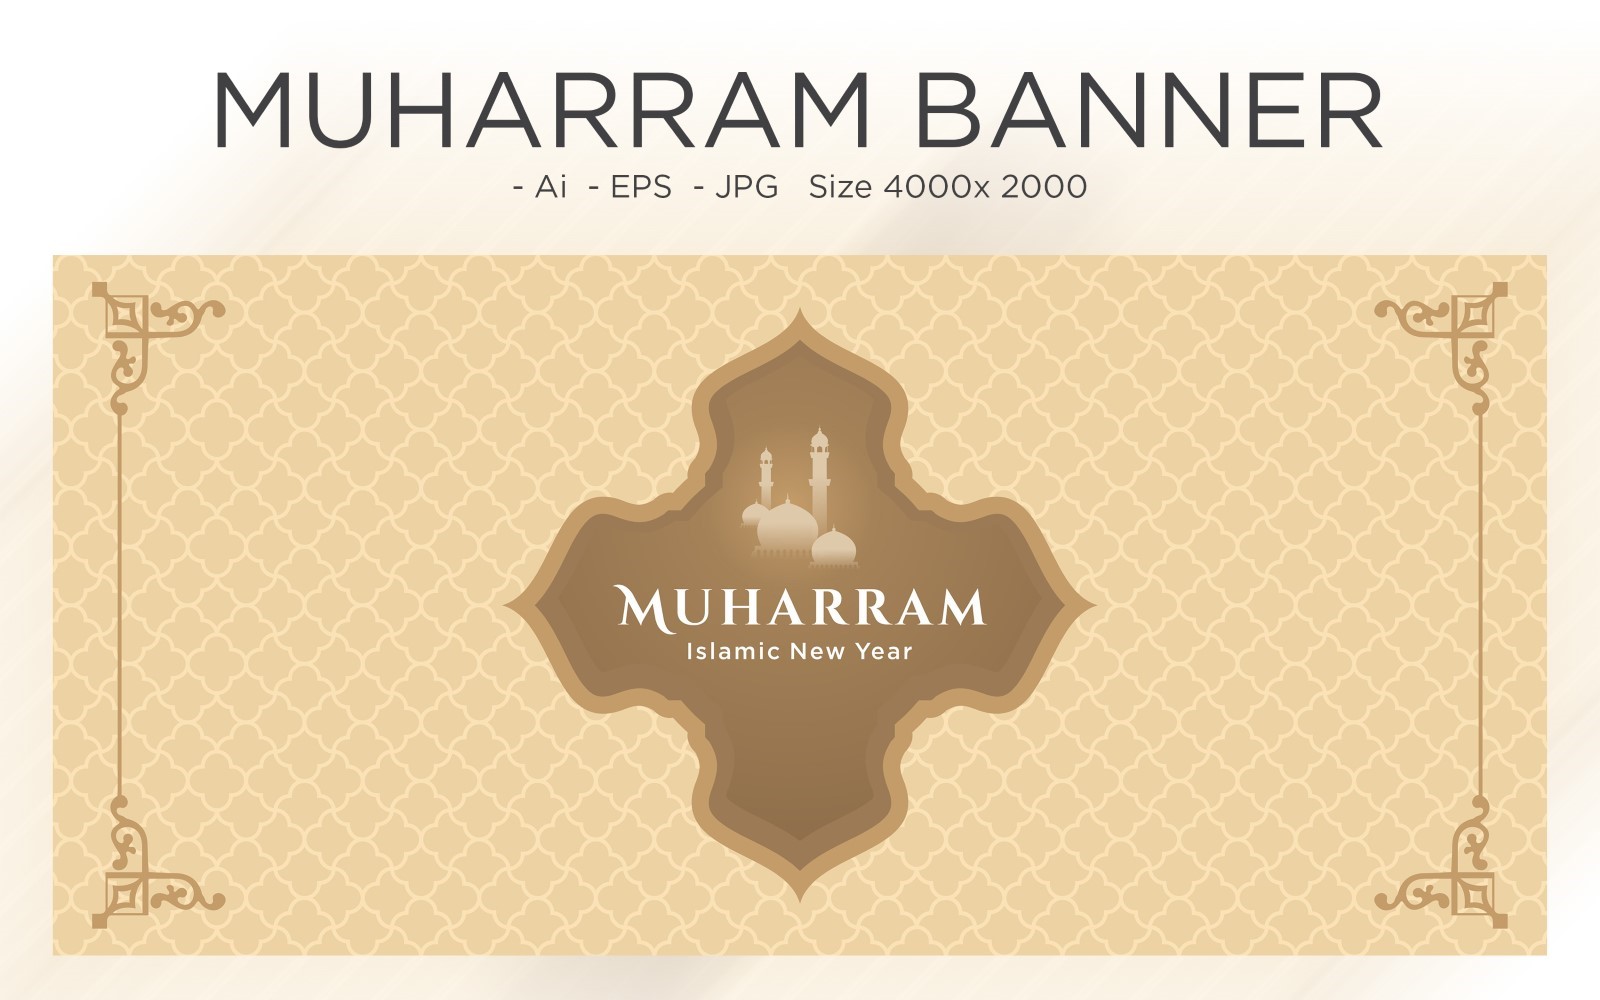 Muslim Islamic New Year Festival Banner with Islamic Patterns - Illustration